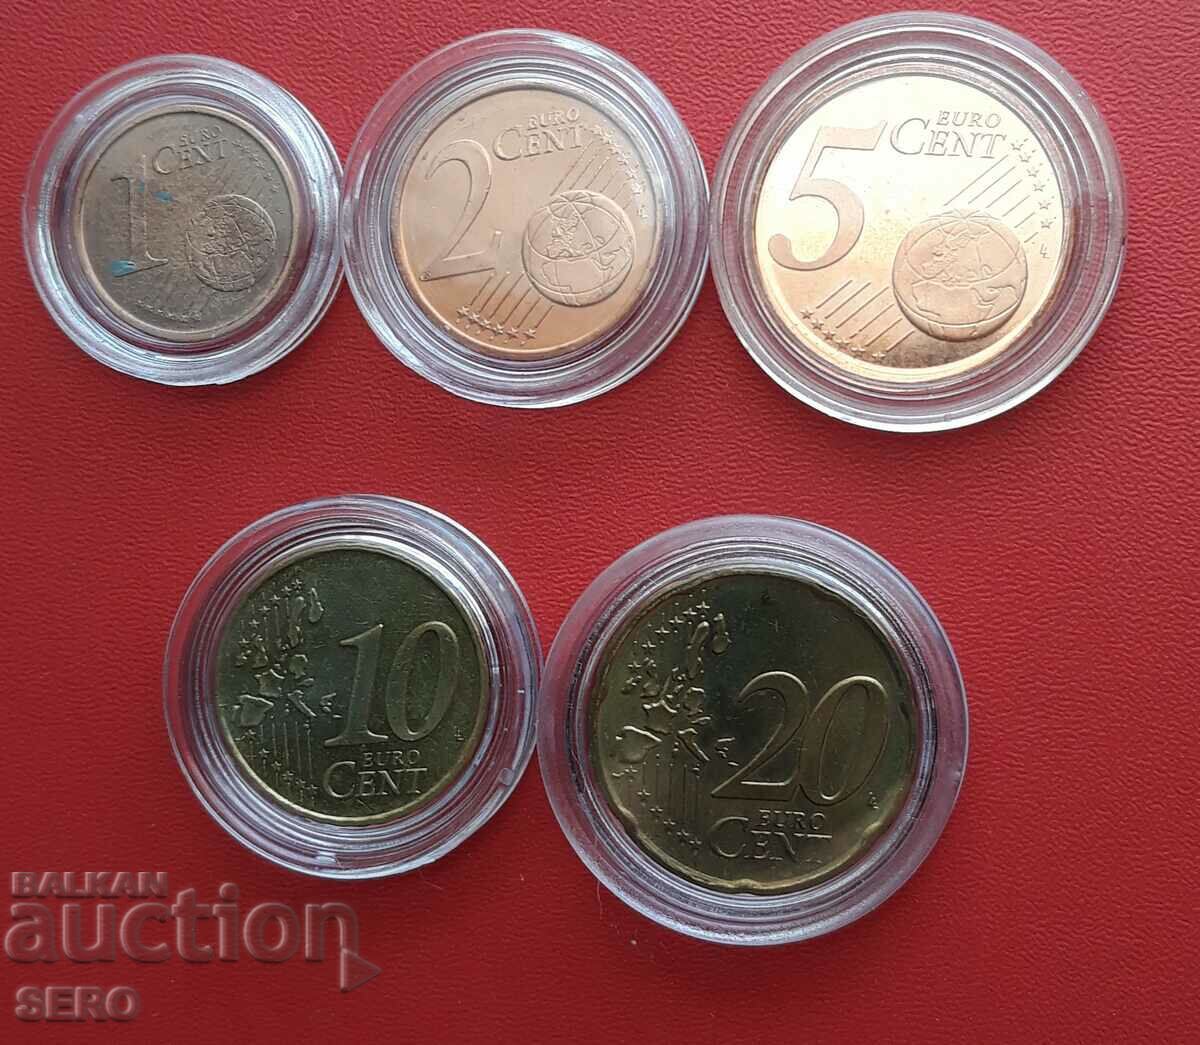 Lot mixt de monede de 5 euro